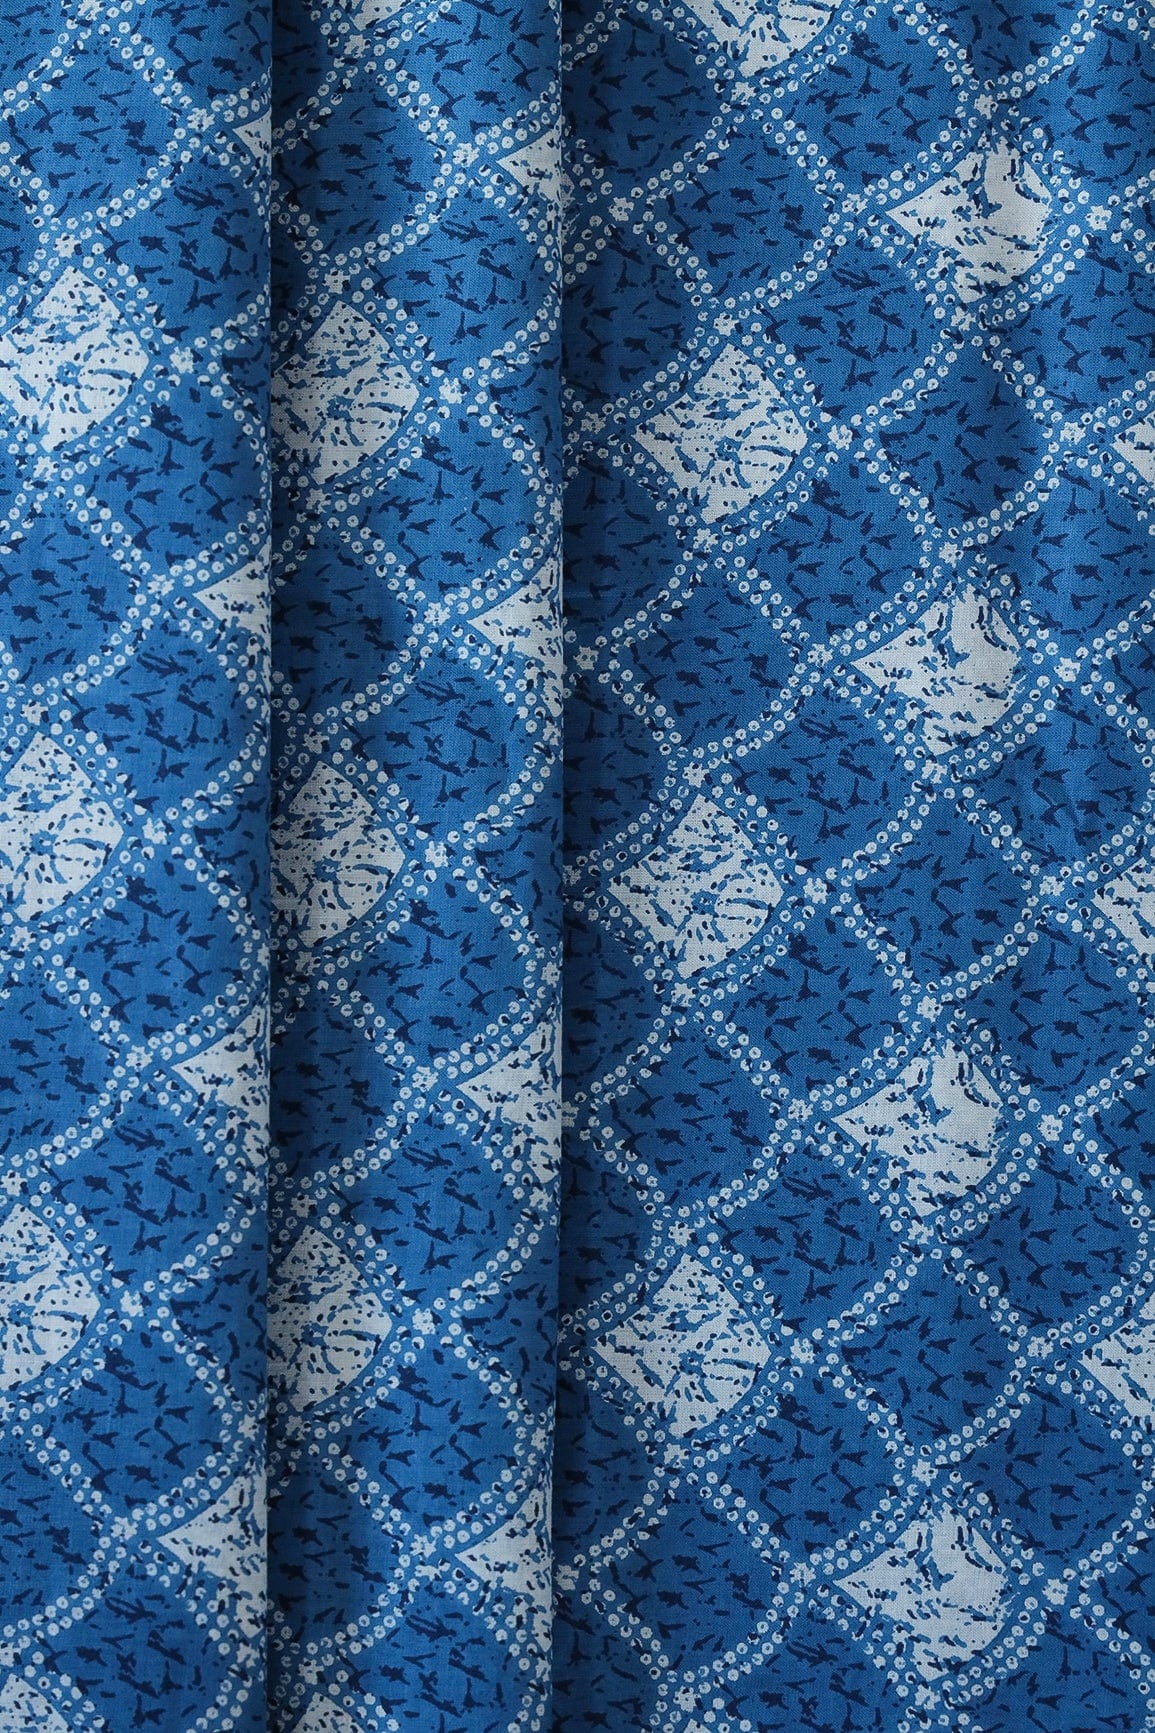 doeraa Prints Cobalt Blue And White Trellis Pattern Print On Pure Cotton Fabric